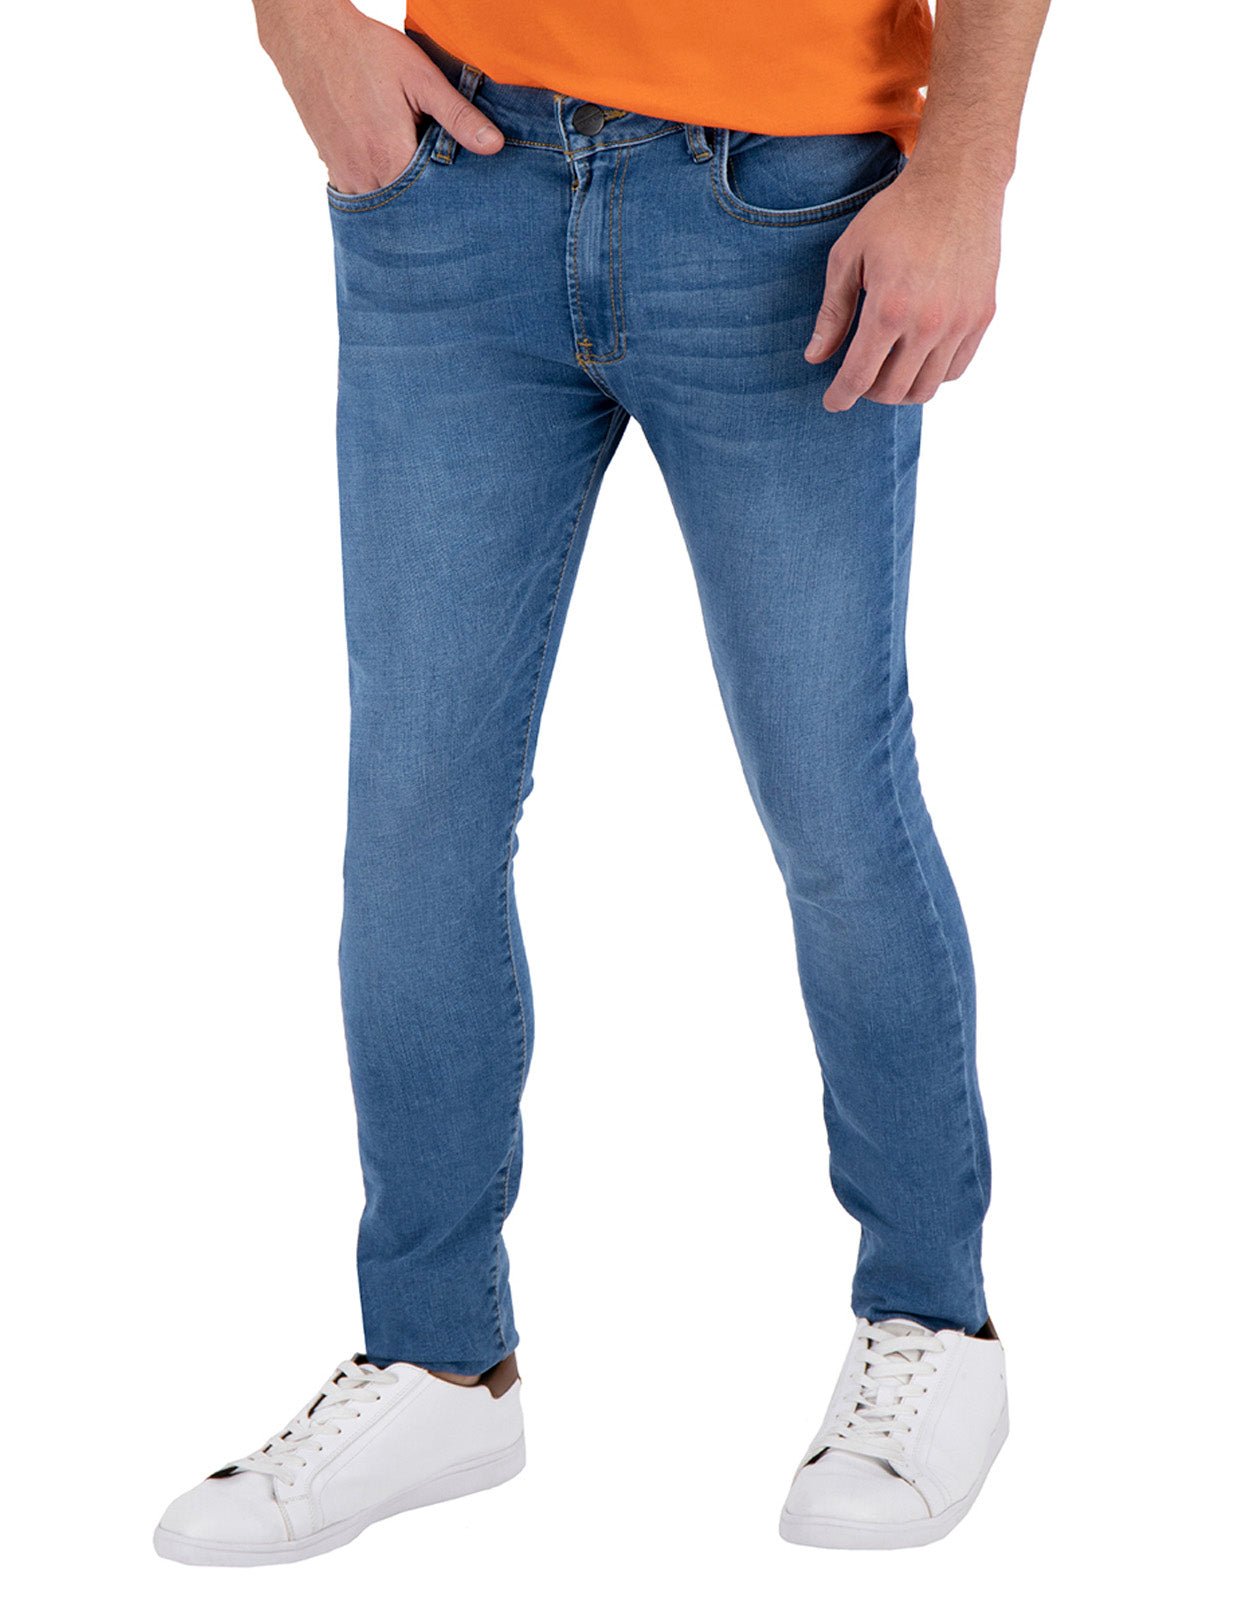 Jeans de Mezclilla Skinny Fit - Misuri